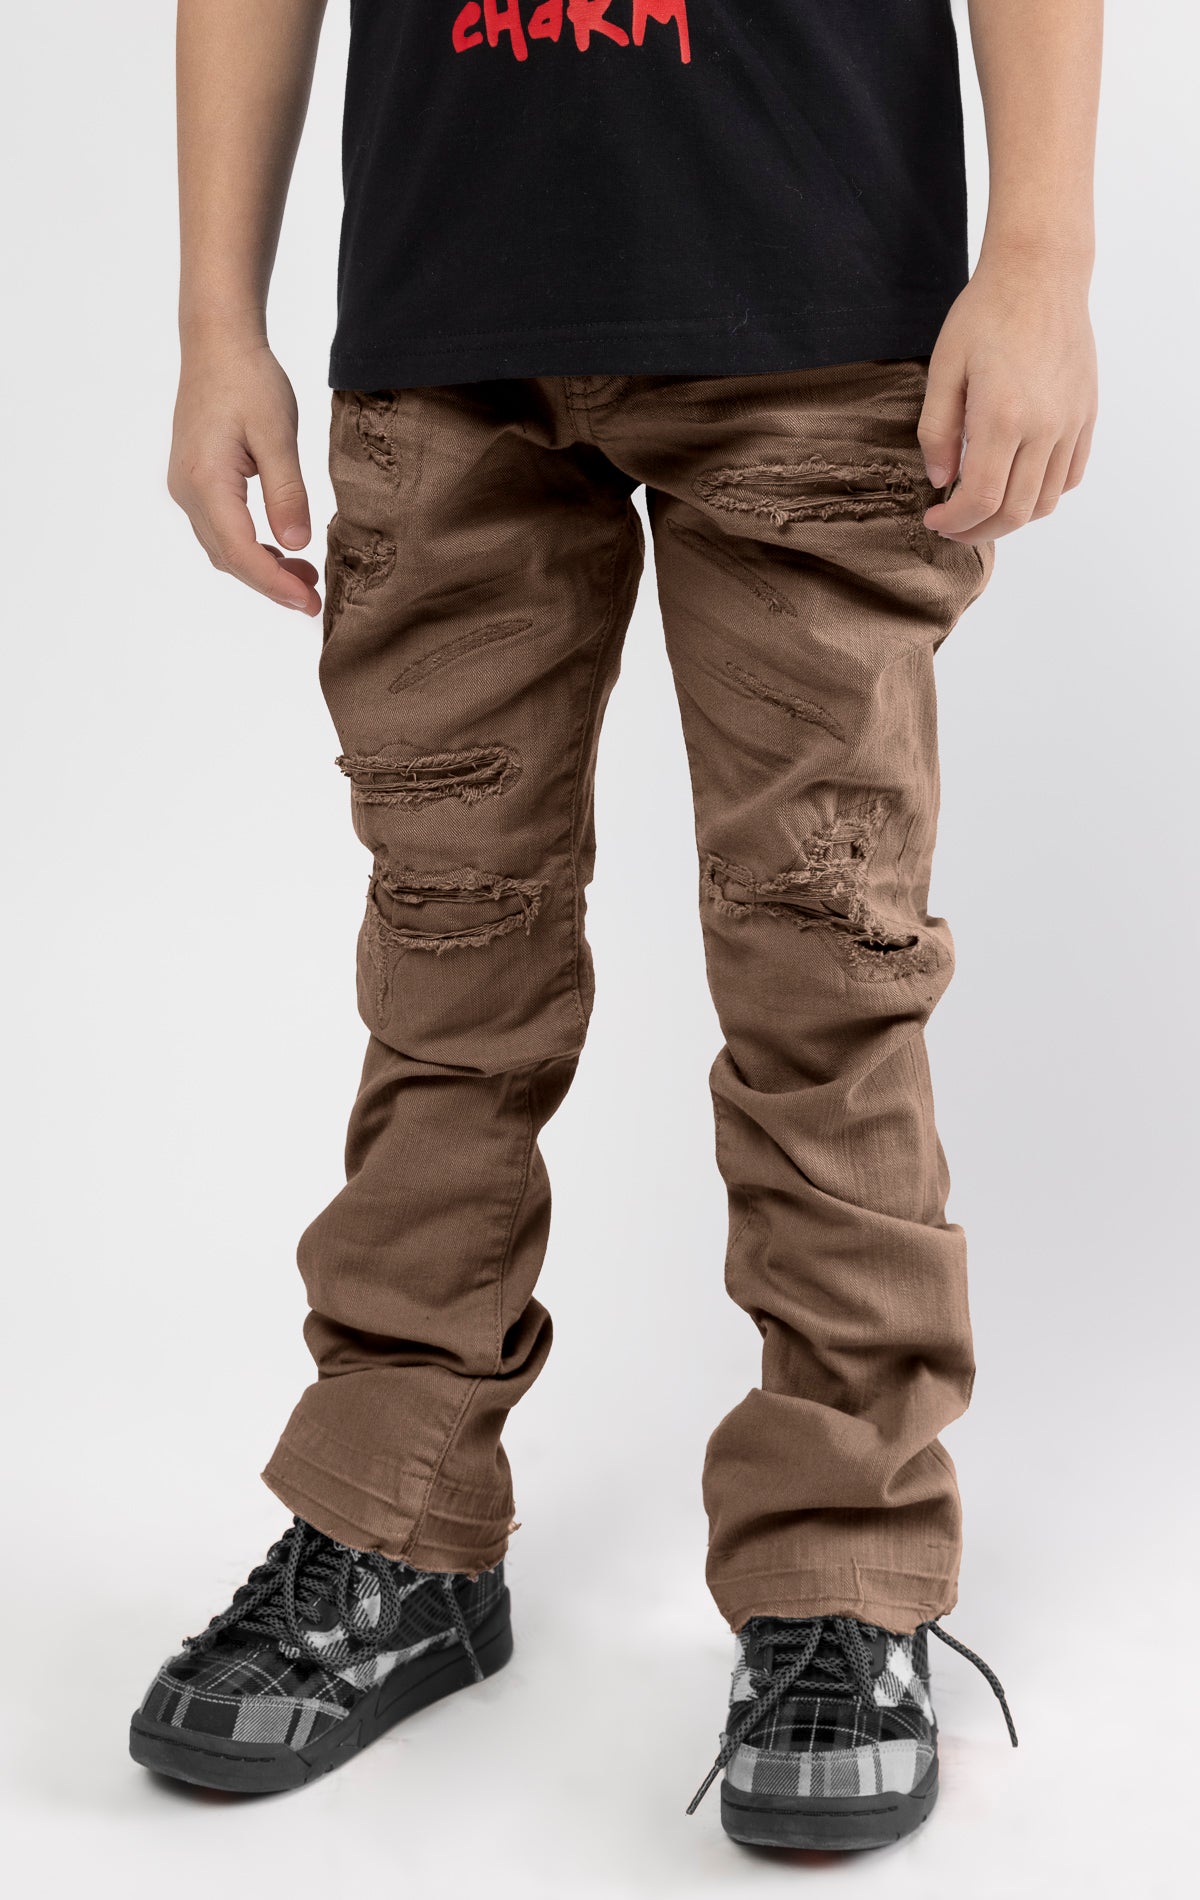 Mocha Extended length flare pants for maximum stacks.